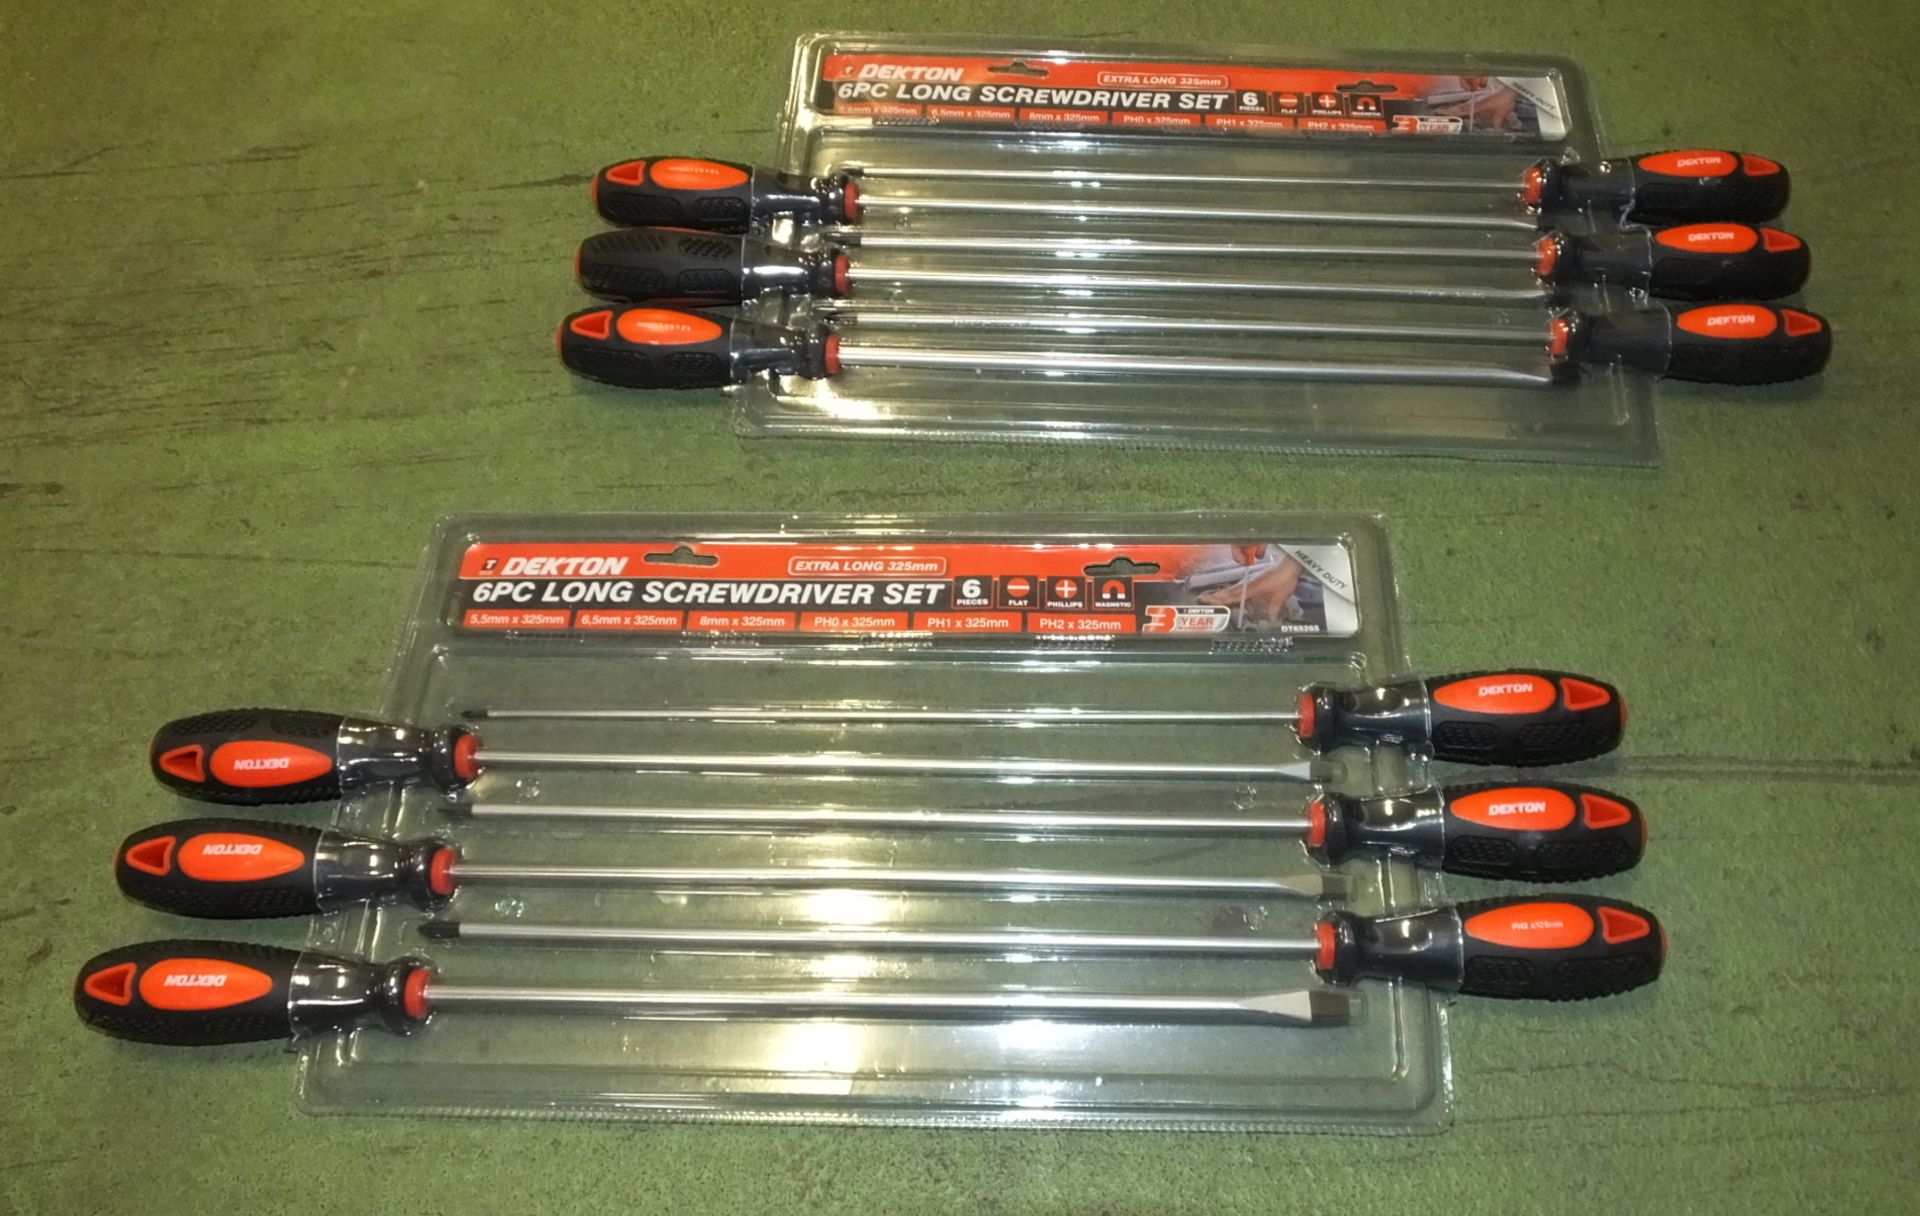 2x Dekton 6PC long screwdriver set